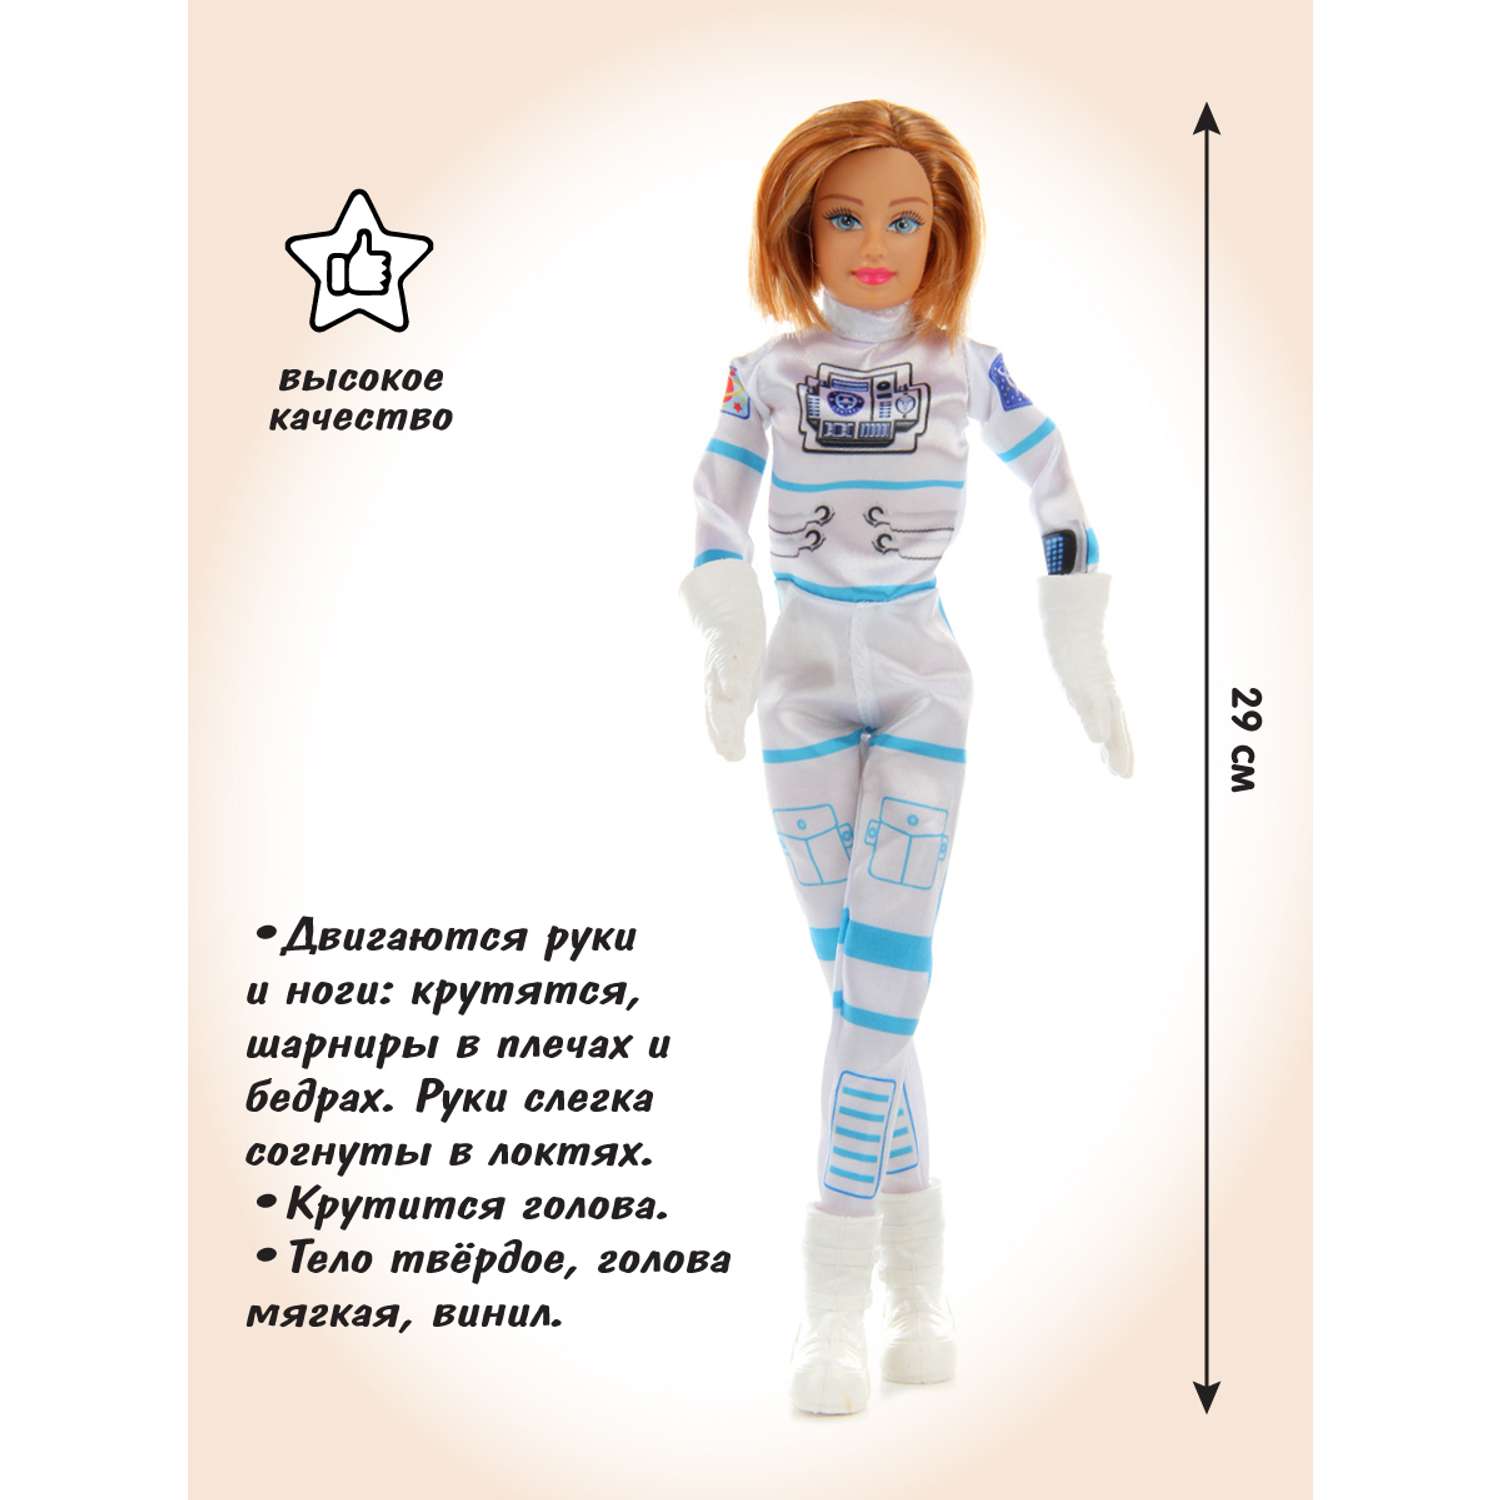 Кукла модель Барби Veld Co космонавт 116004 - фото 2